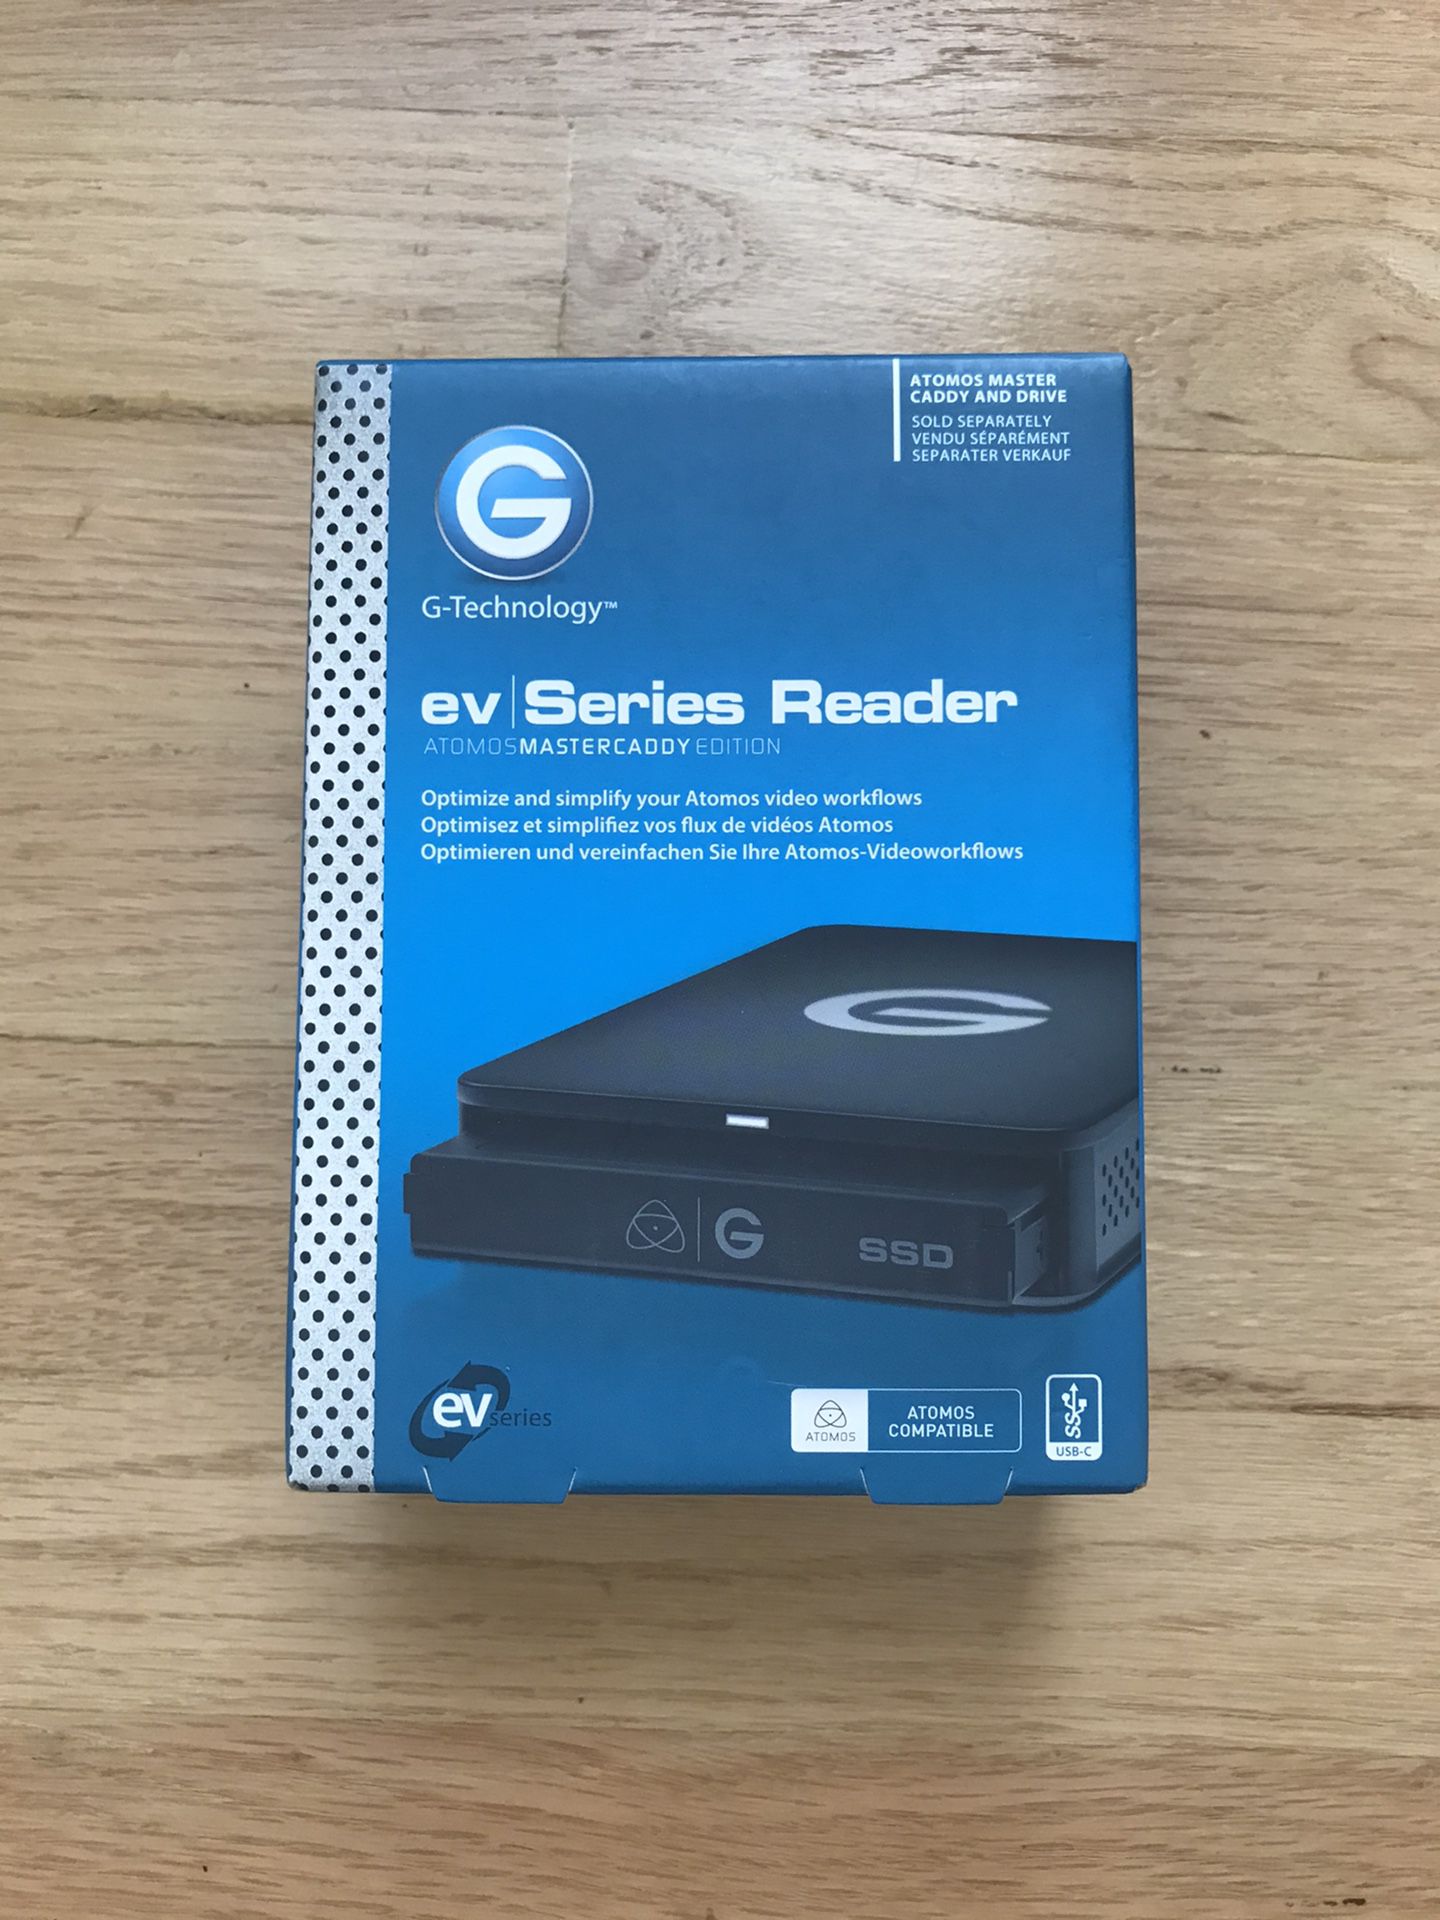 G-Technology ev Series Reader Atomos Mastercaddy Edition